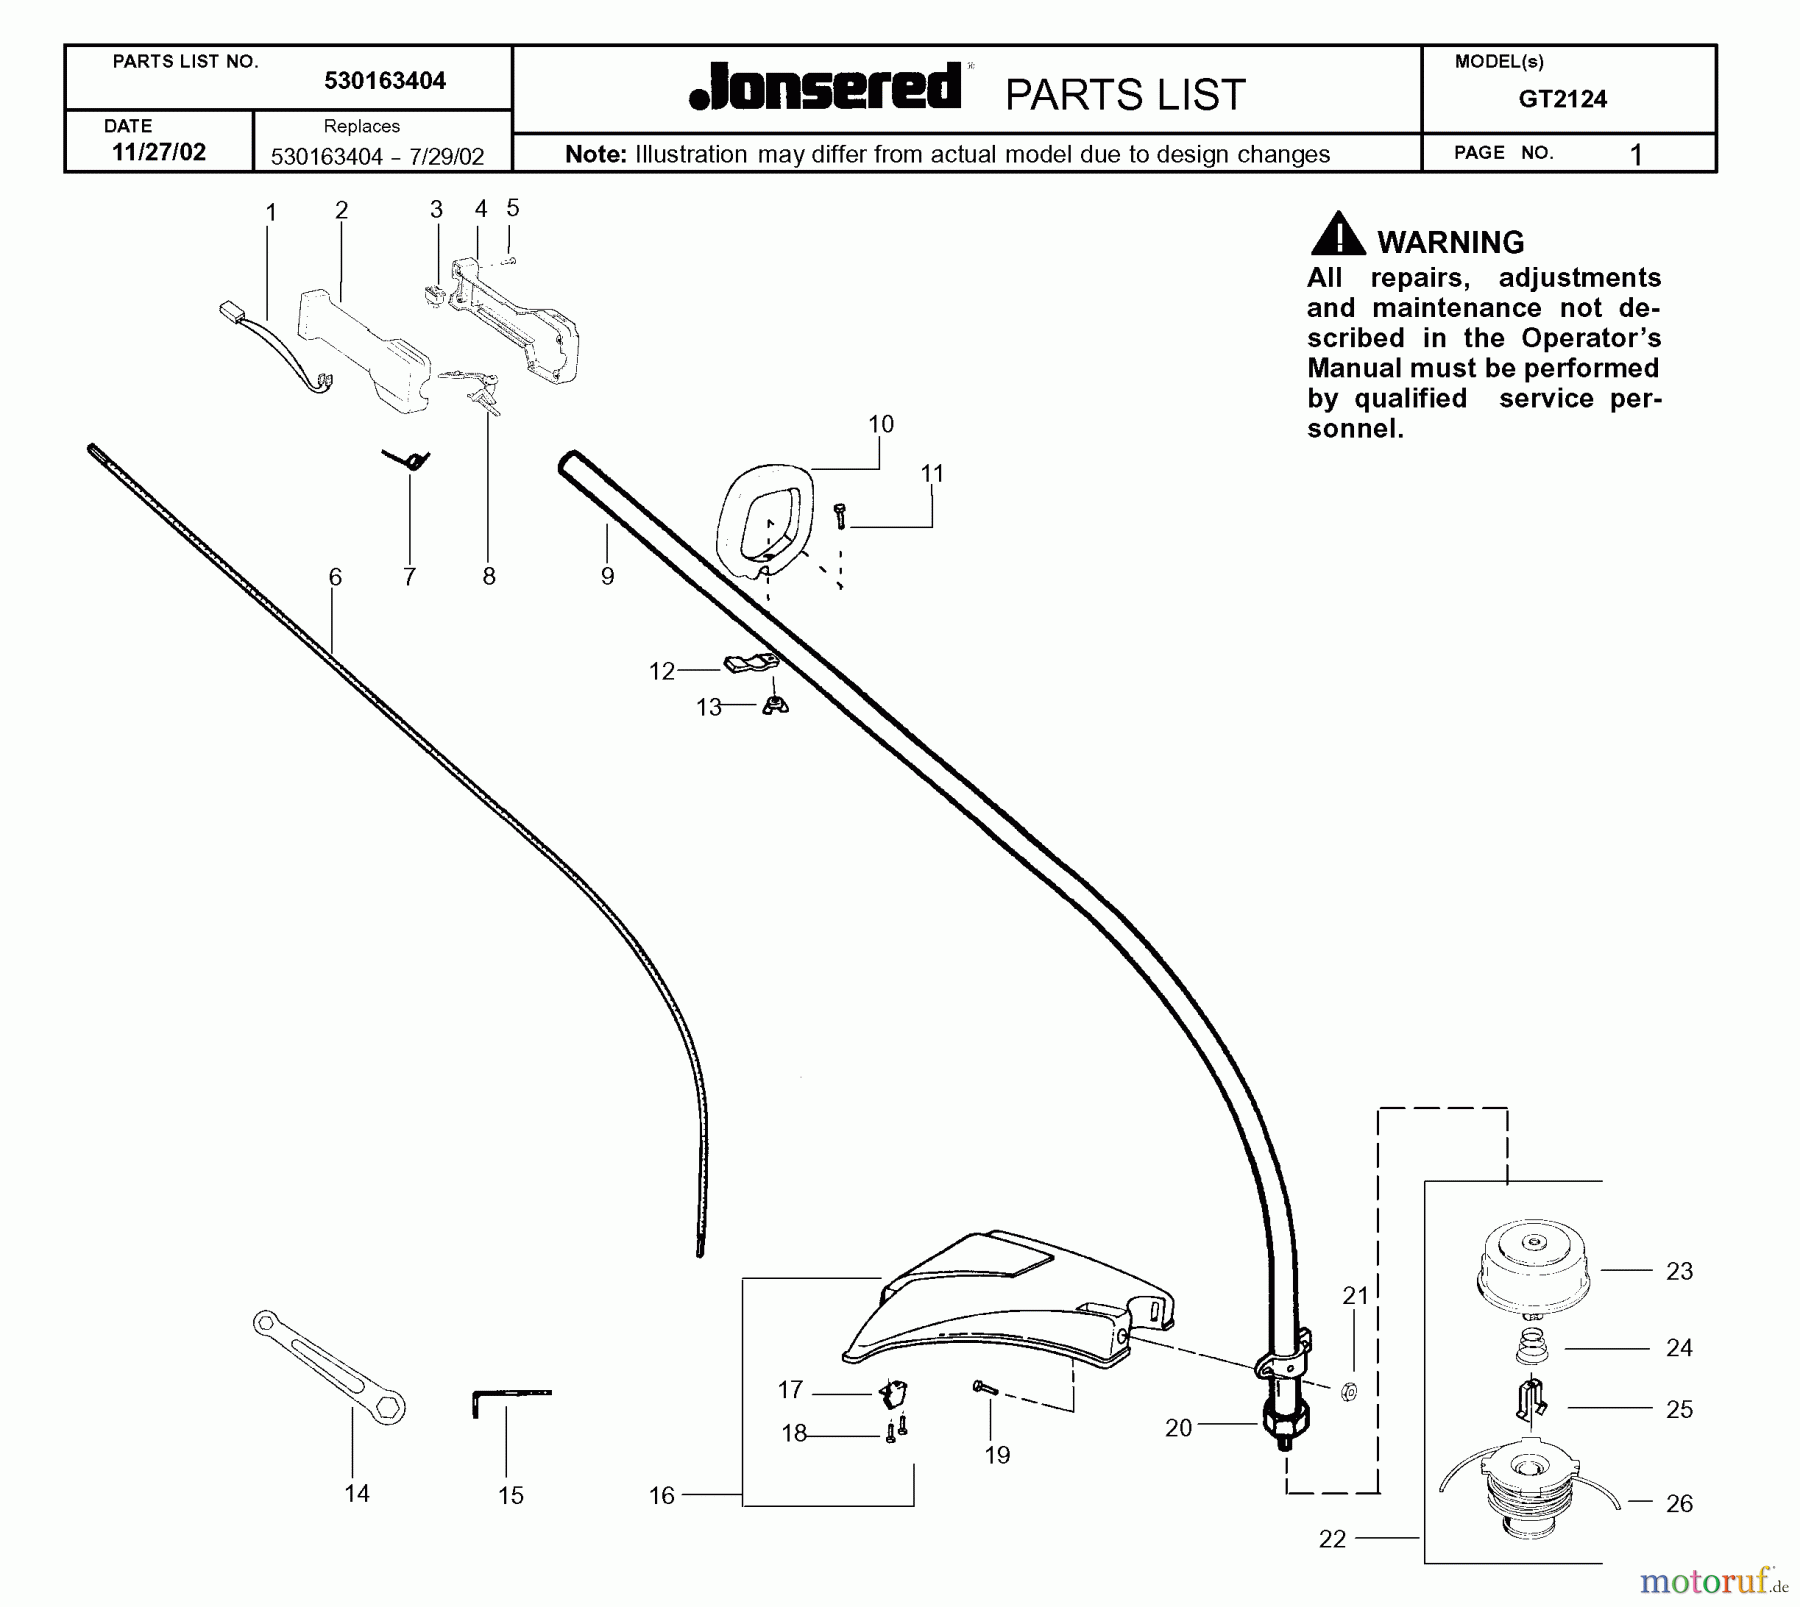  Jonsered Motorsensen, Trimmer GT2124 - Jonsered String/Brush Trimmer (2003-01) SHAFT HANDLE